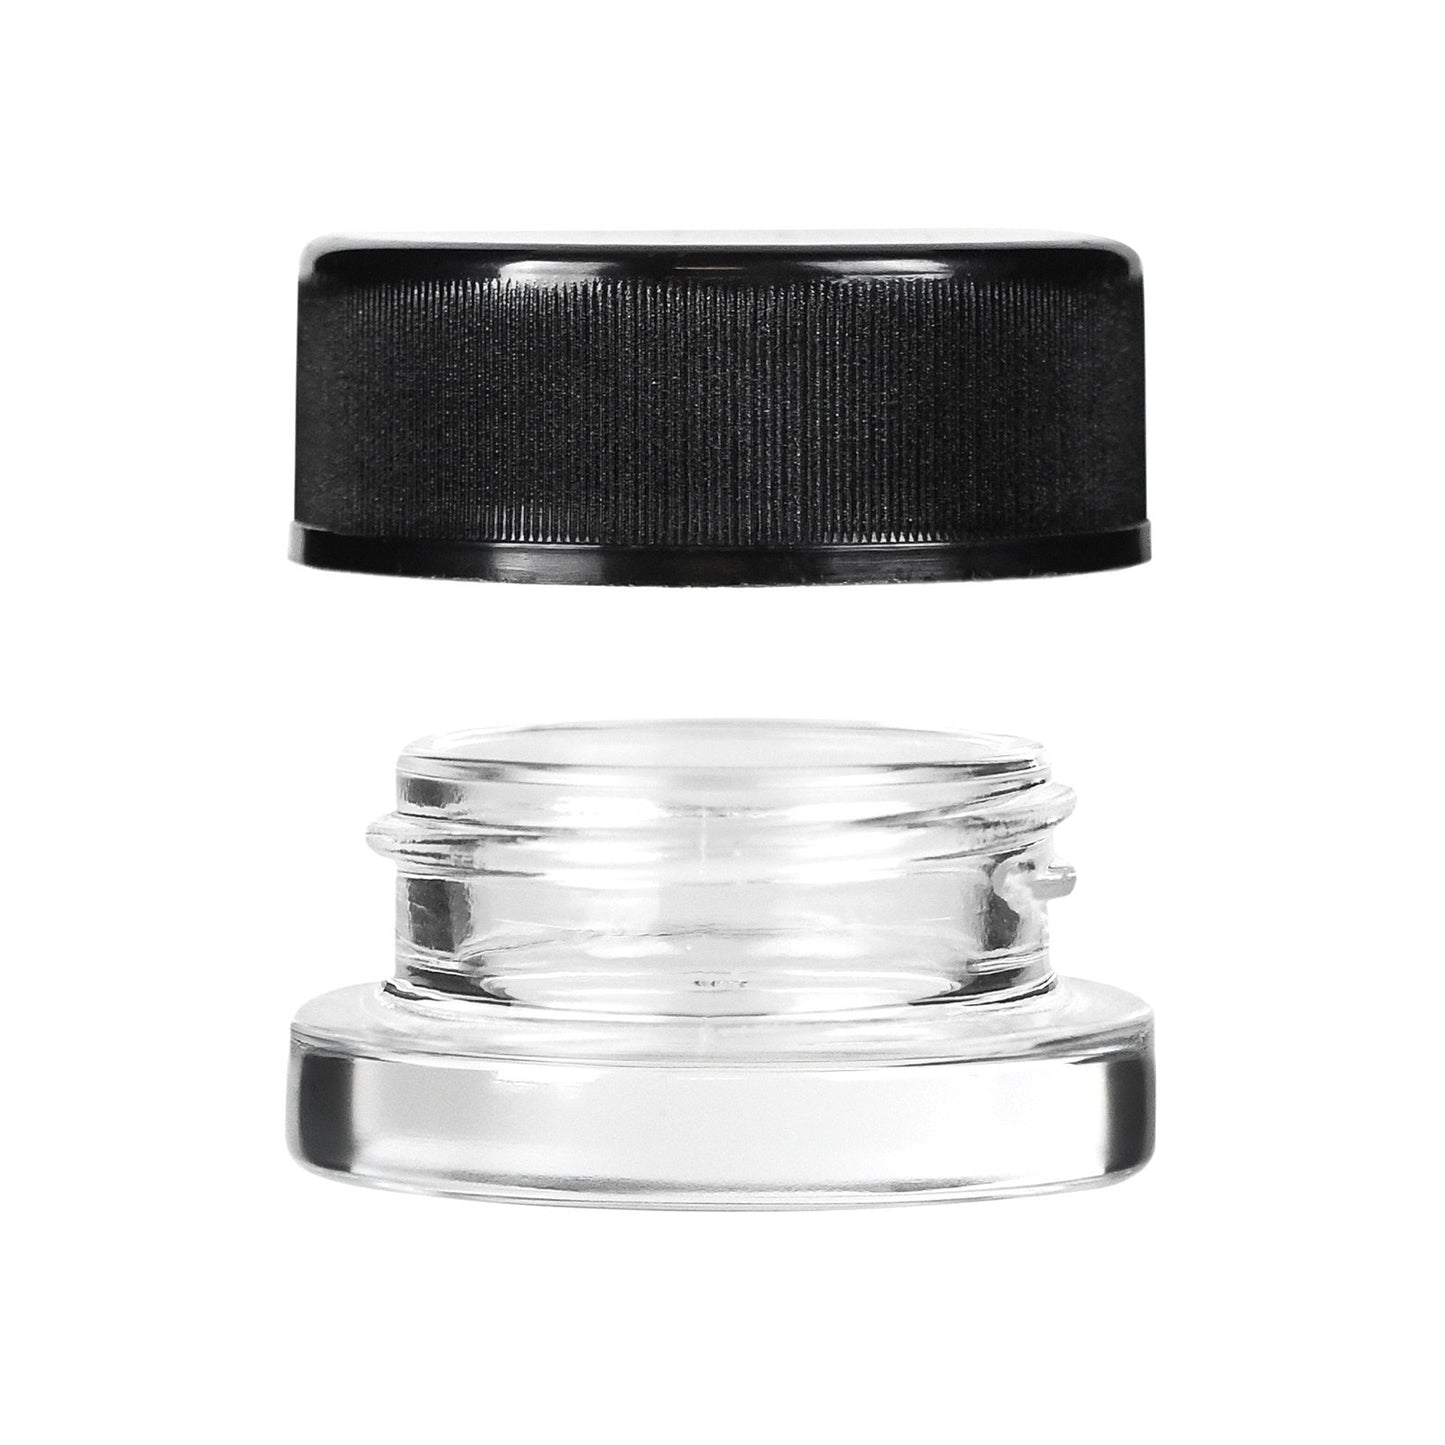 9ml Child Resistant Glass jar with Black Cap - 2 Gram 90 COUNT